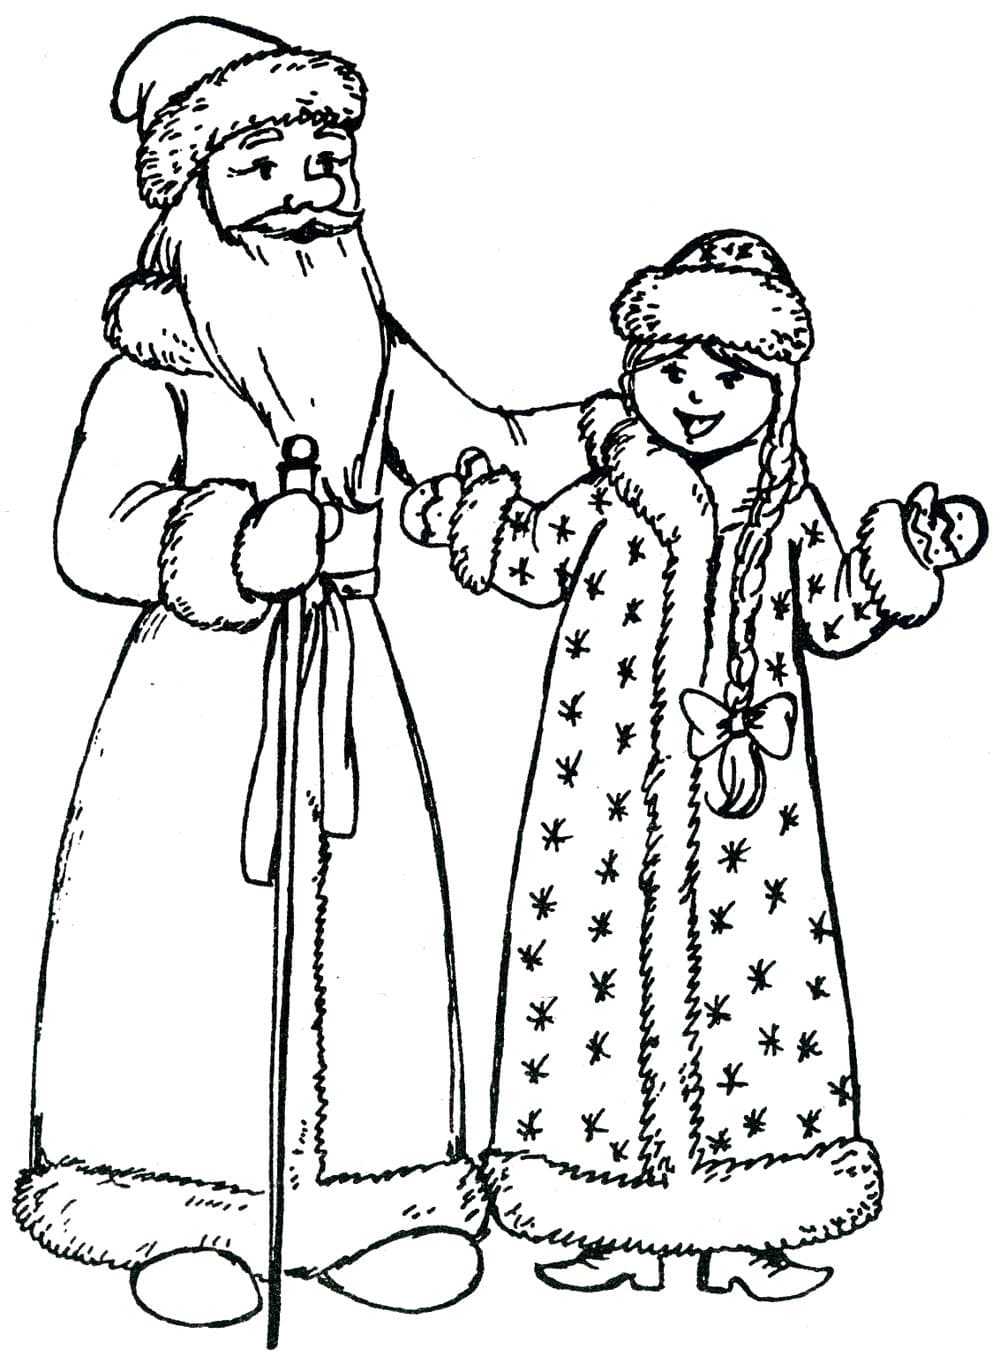 Раскраски Дед Мороз и Снегурочка. Раскраска 2